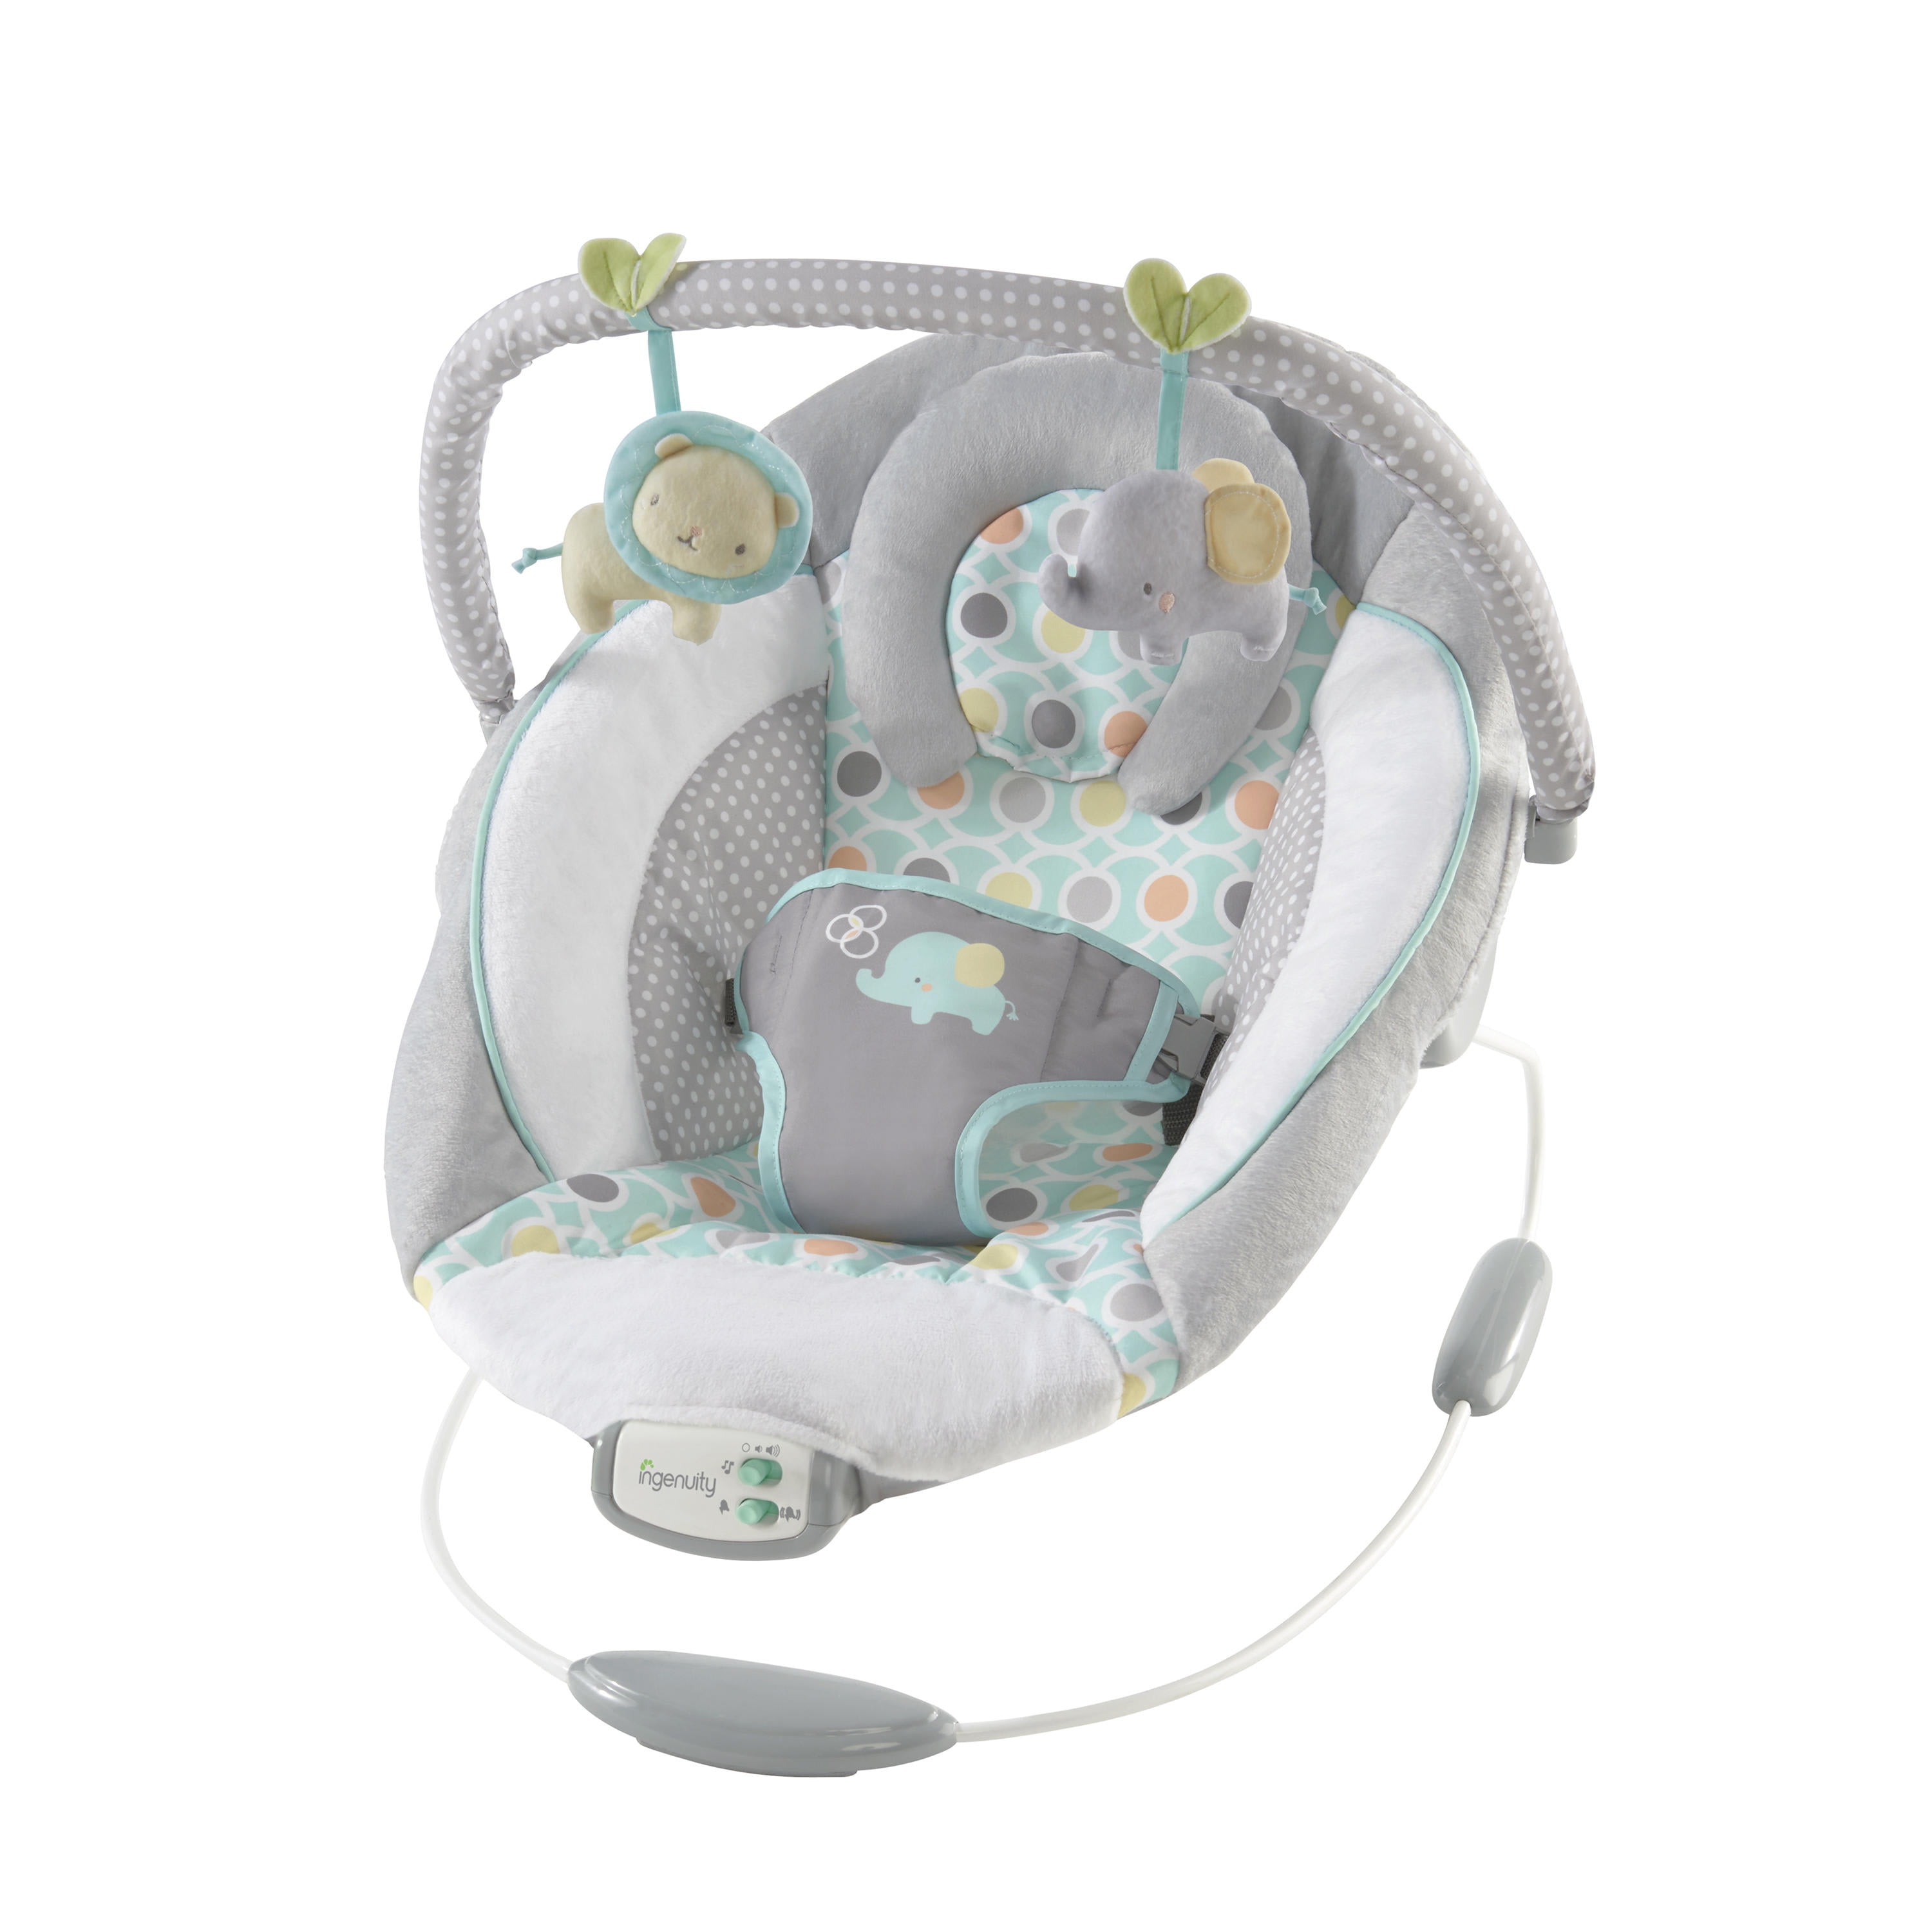 1 White Harness Seat Clip for Ingenuity Inlighten Bouncer Infant Baby Swings NEW 